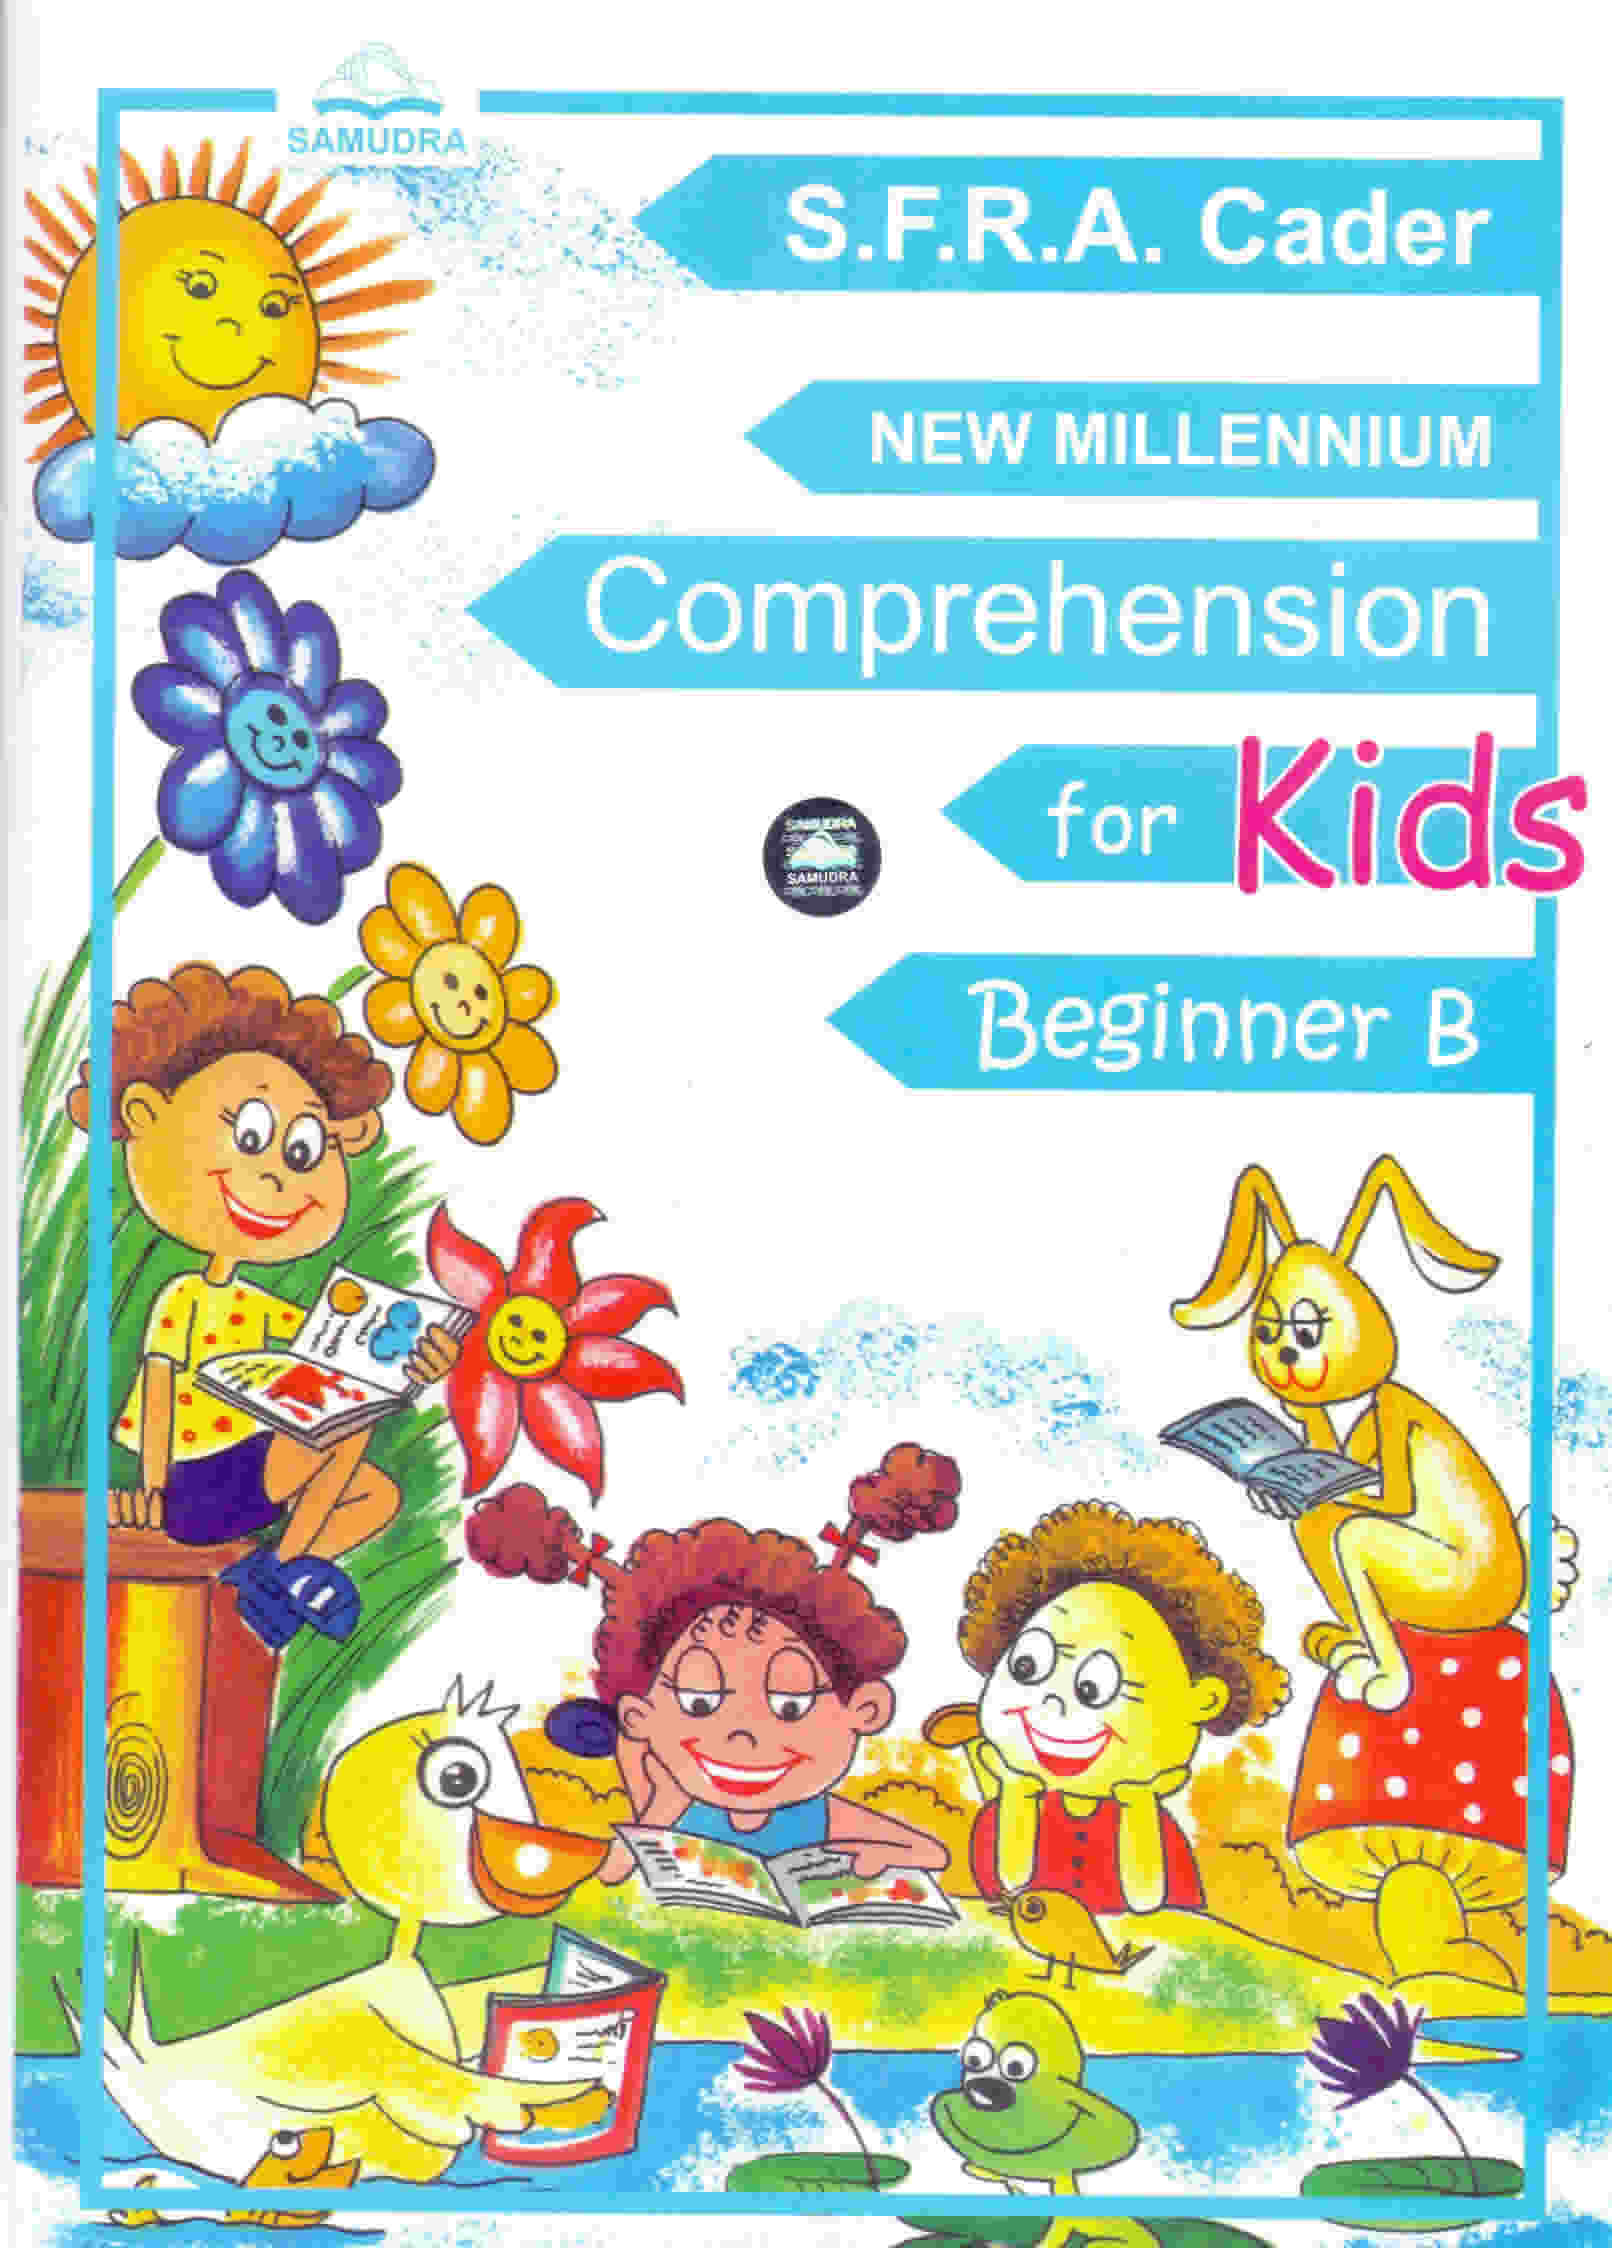 NEW MILLENNIUM COMPREHENSION FOR KIDS BEGINNER B